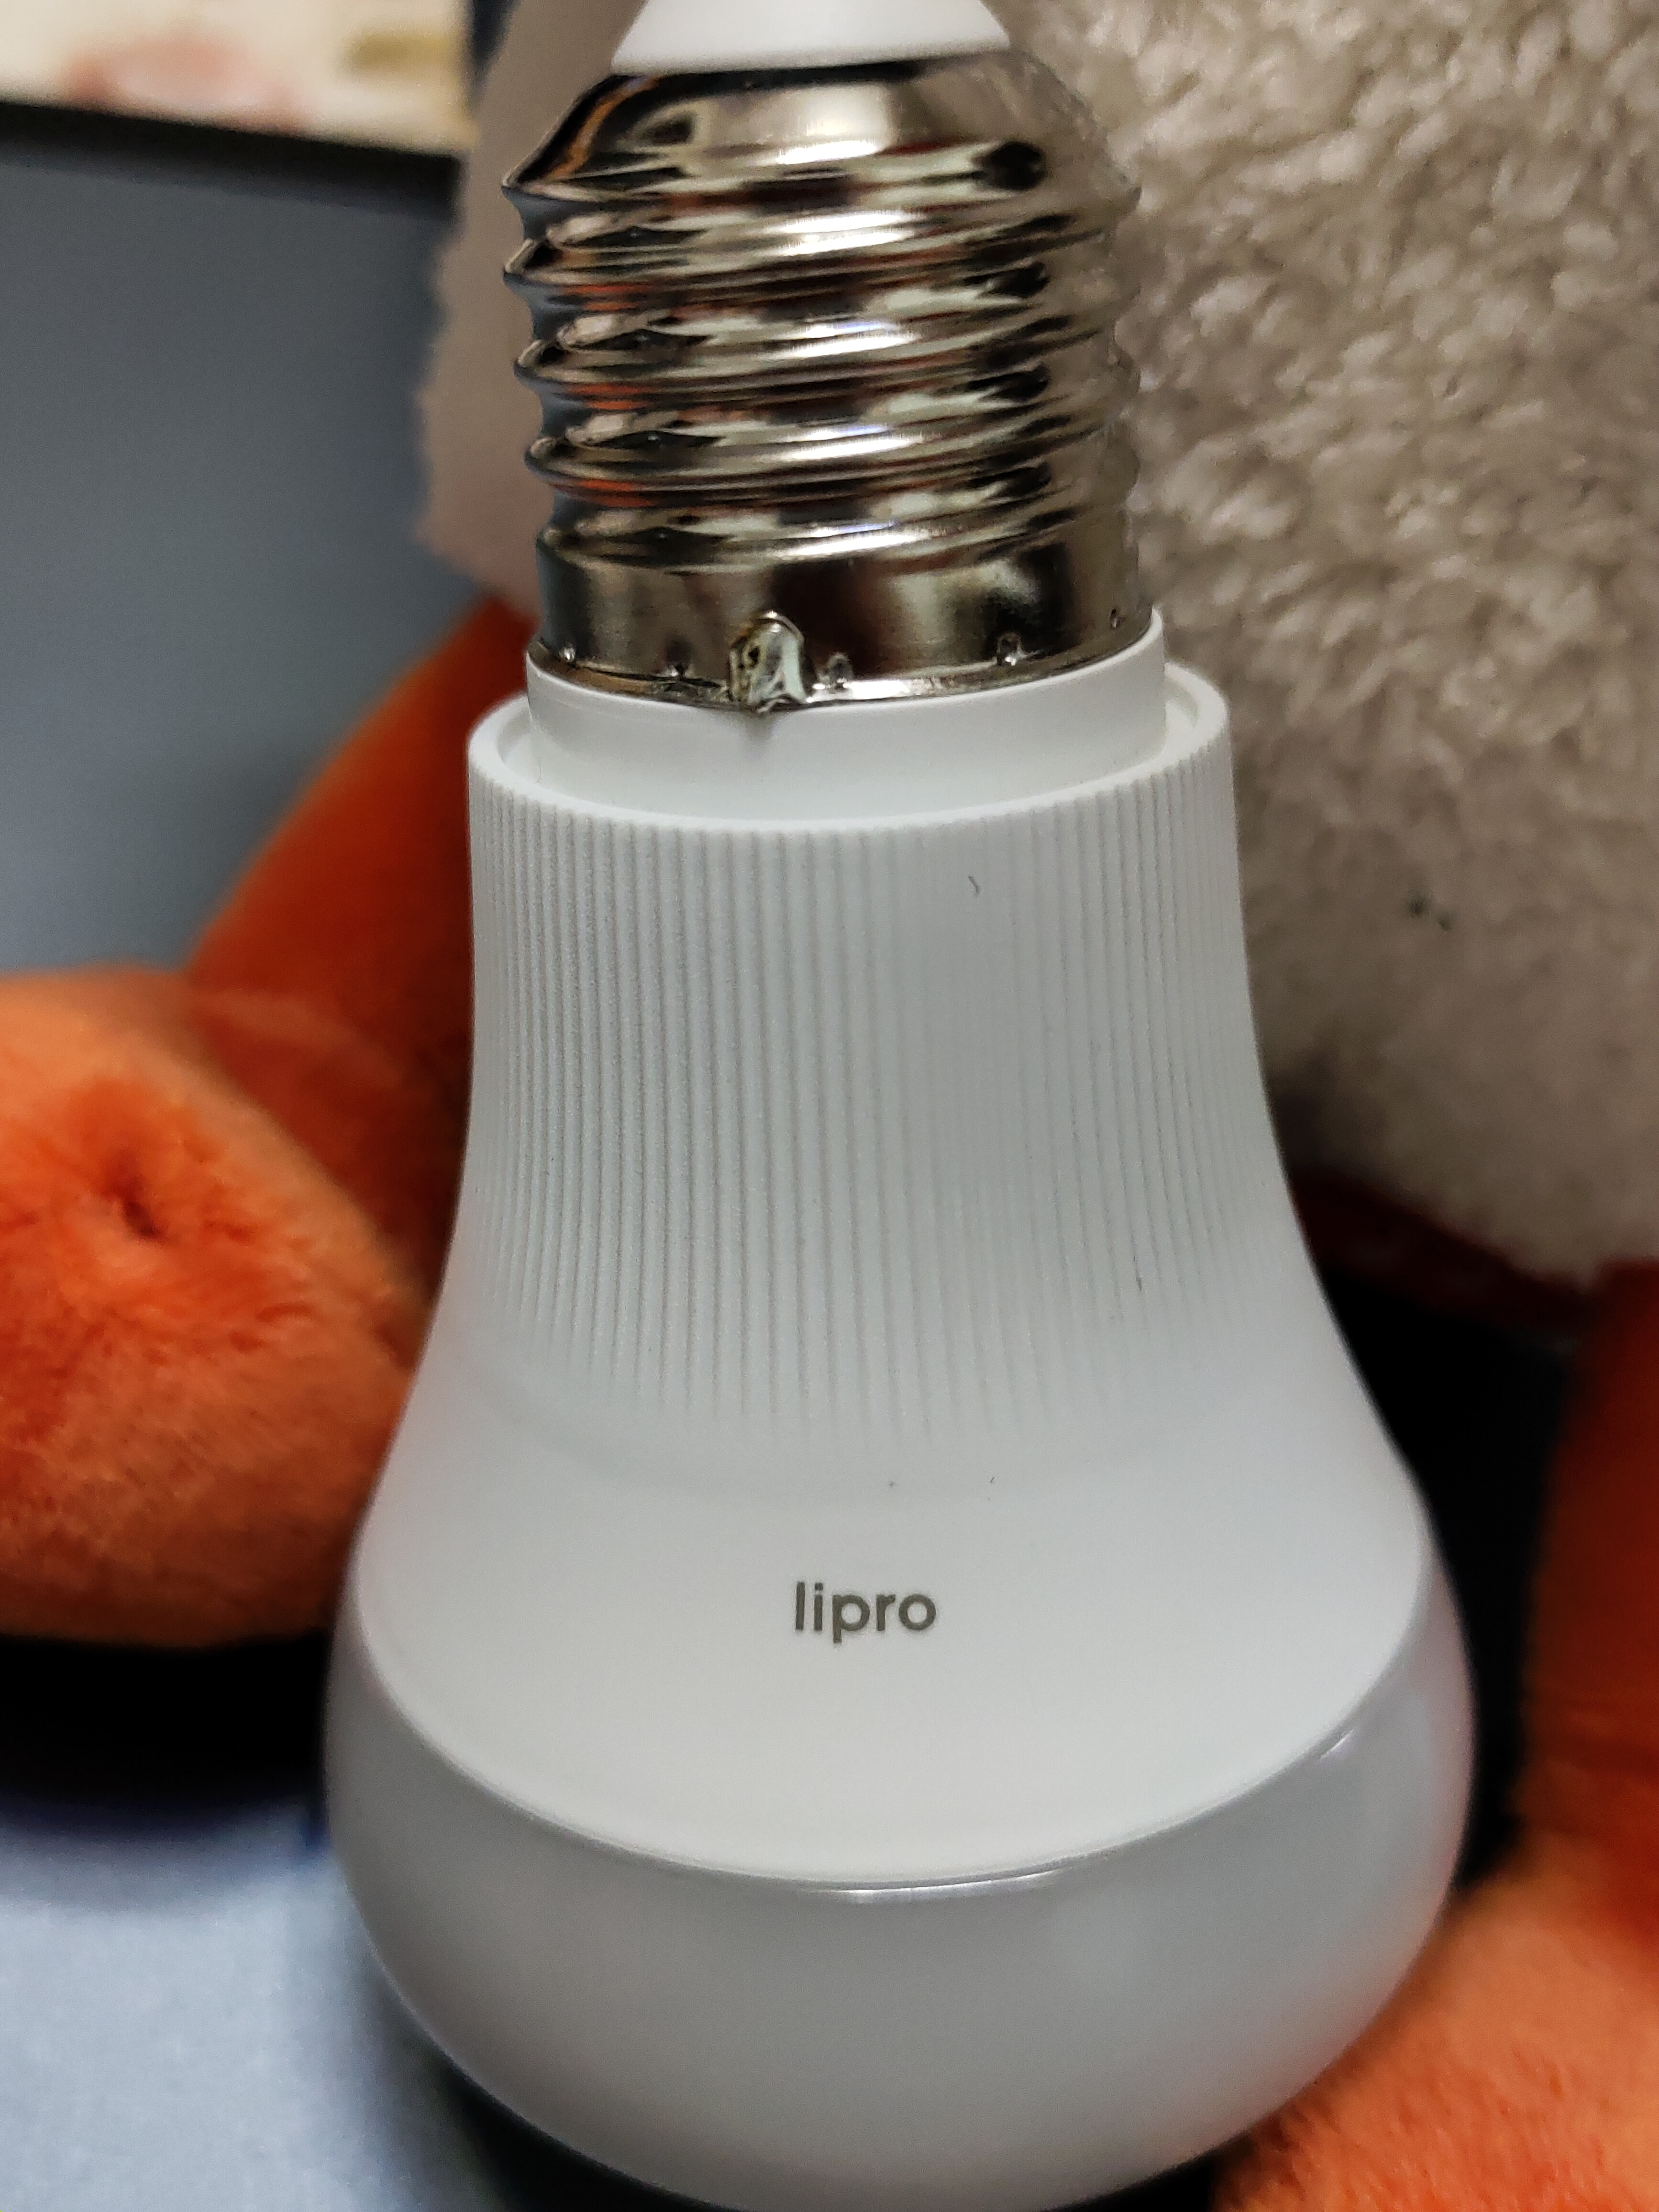 Lipro 光临花灯会<br />
如然之光，真的用起来舒服，感觉不刺眼，看东西眼睛不会很累，产品性价比极好<br />
本产品为3w【4000k】